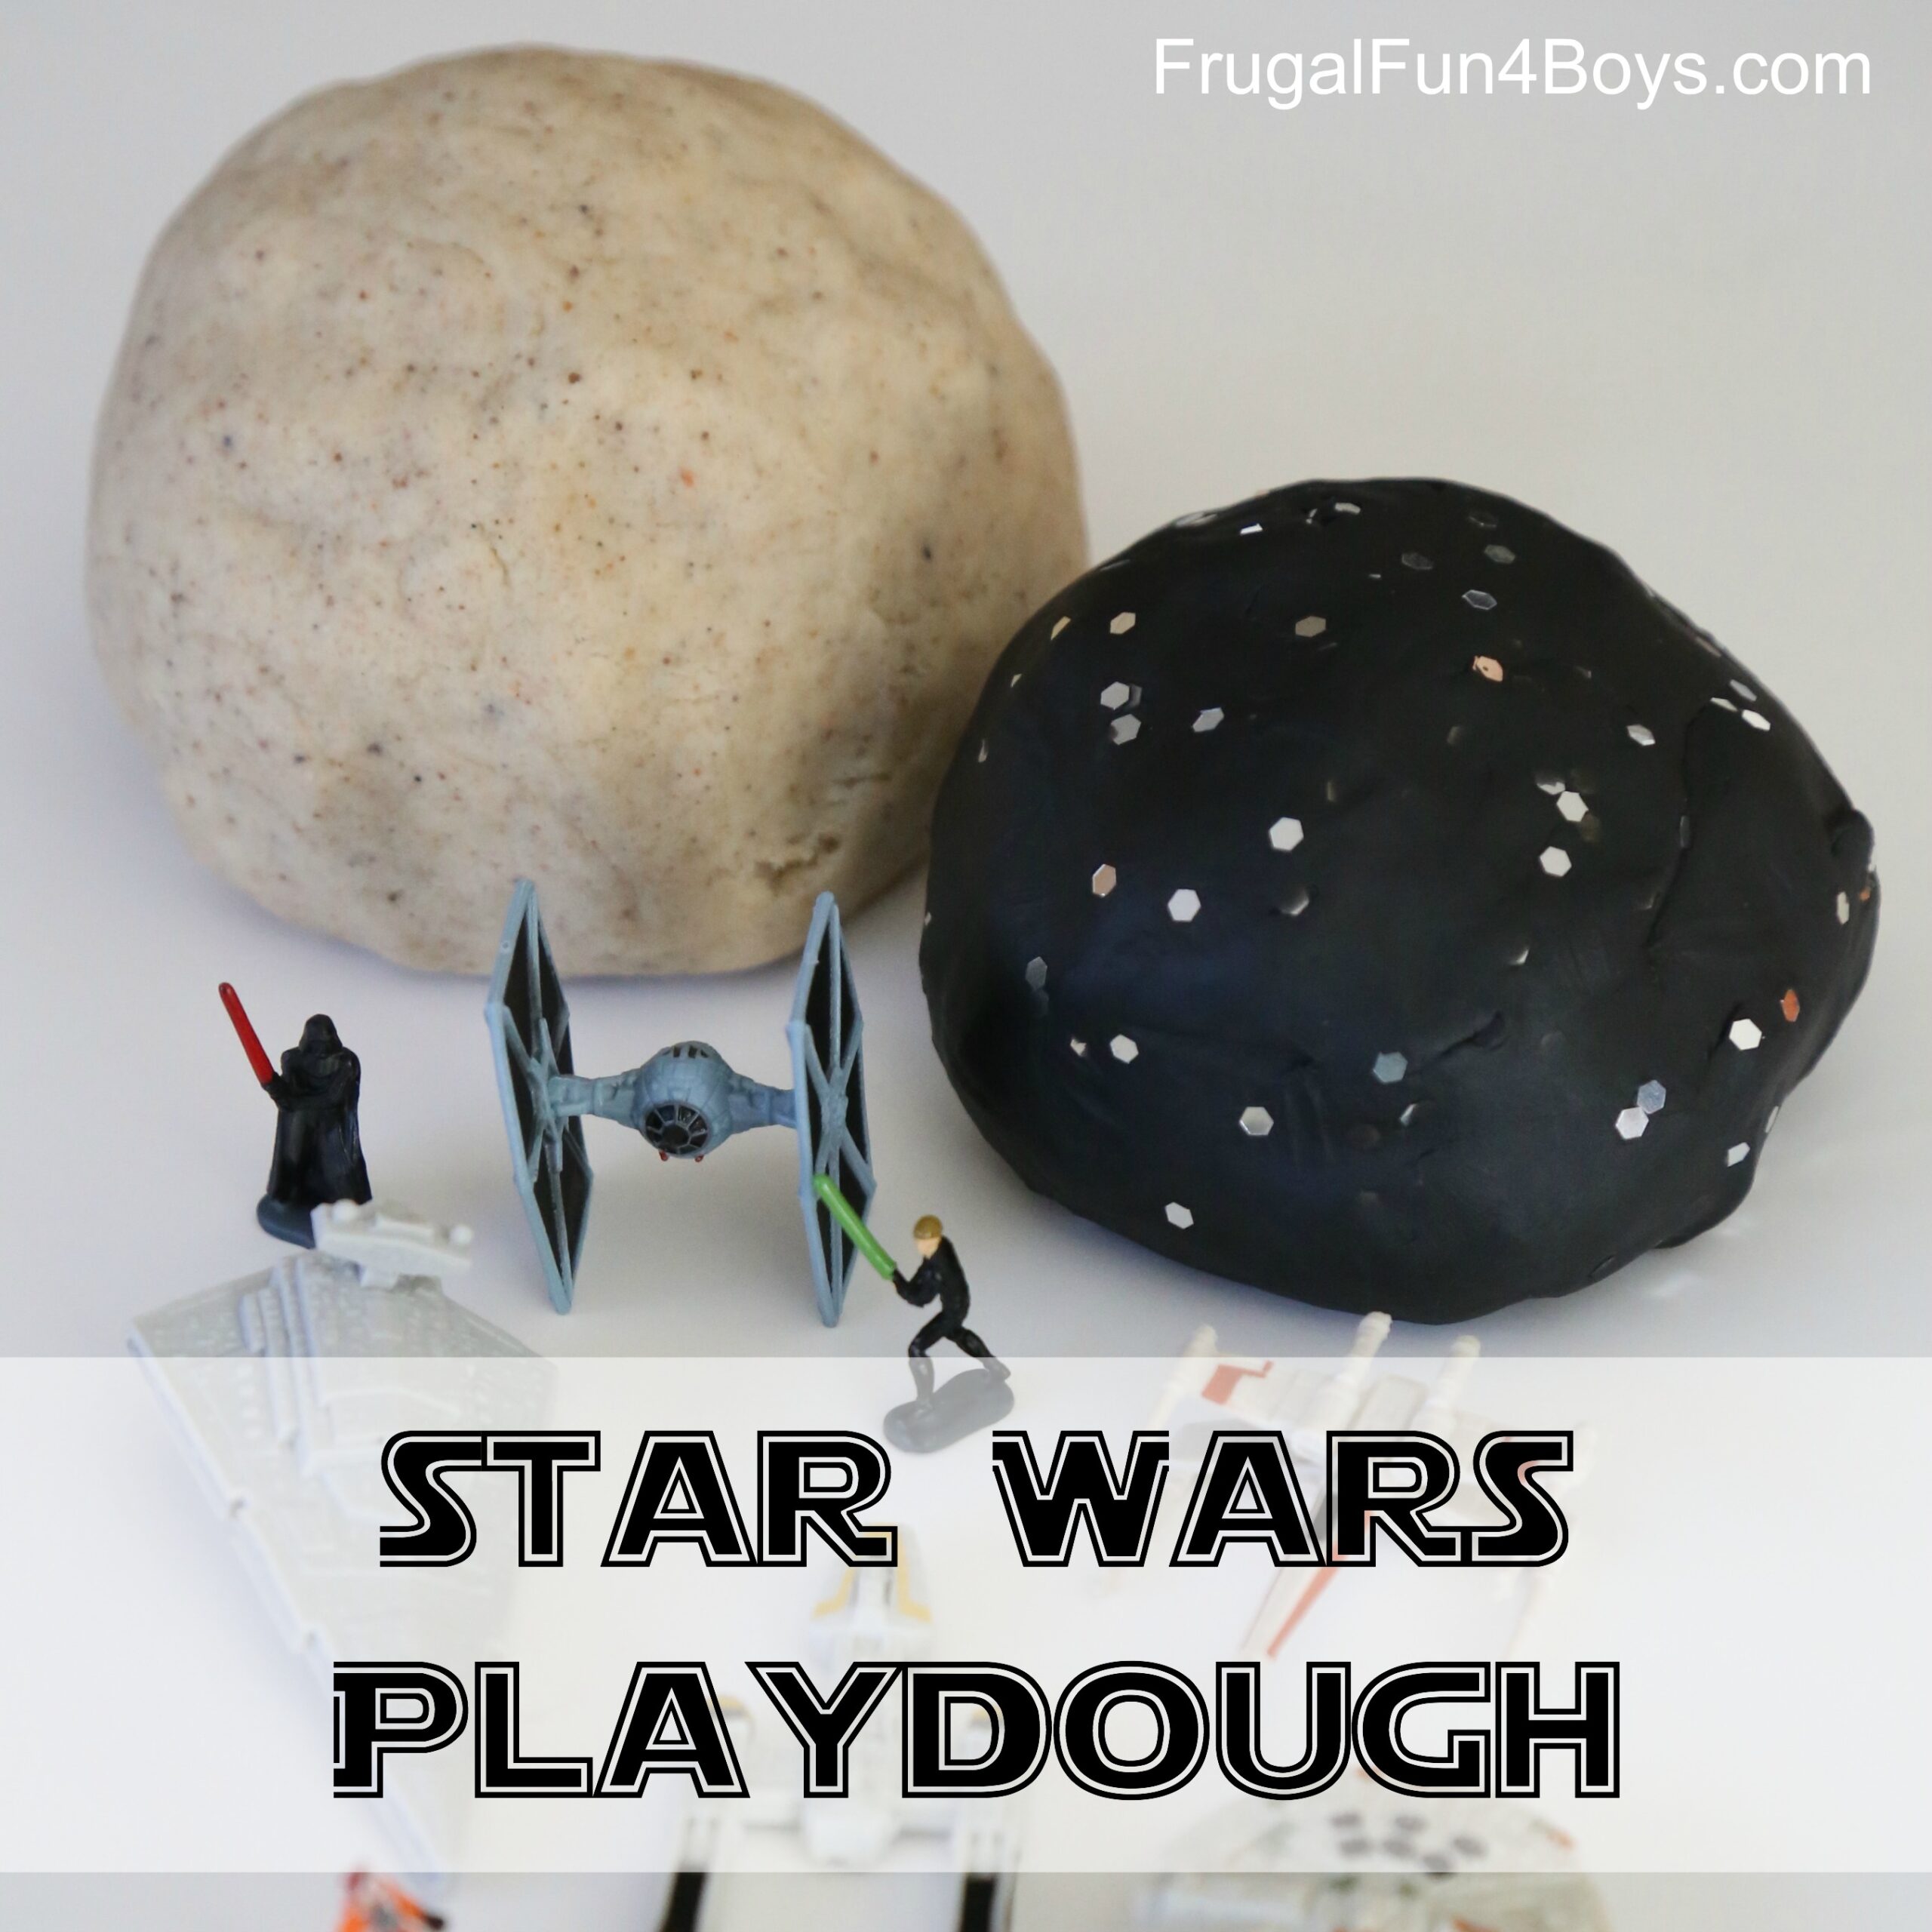 Star Wars Play Dough Imaginative Play!